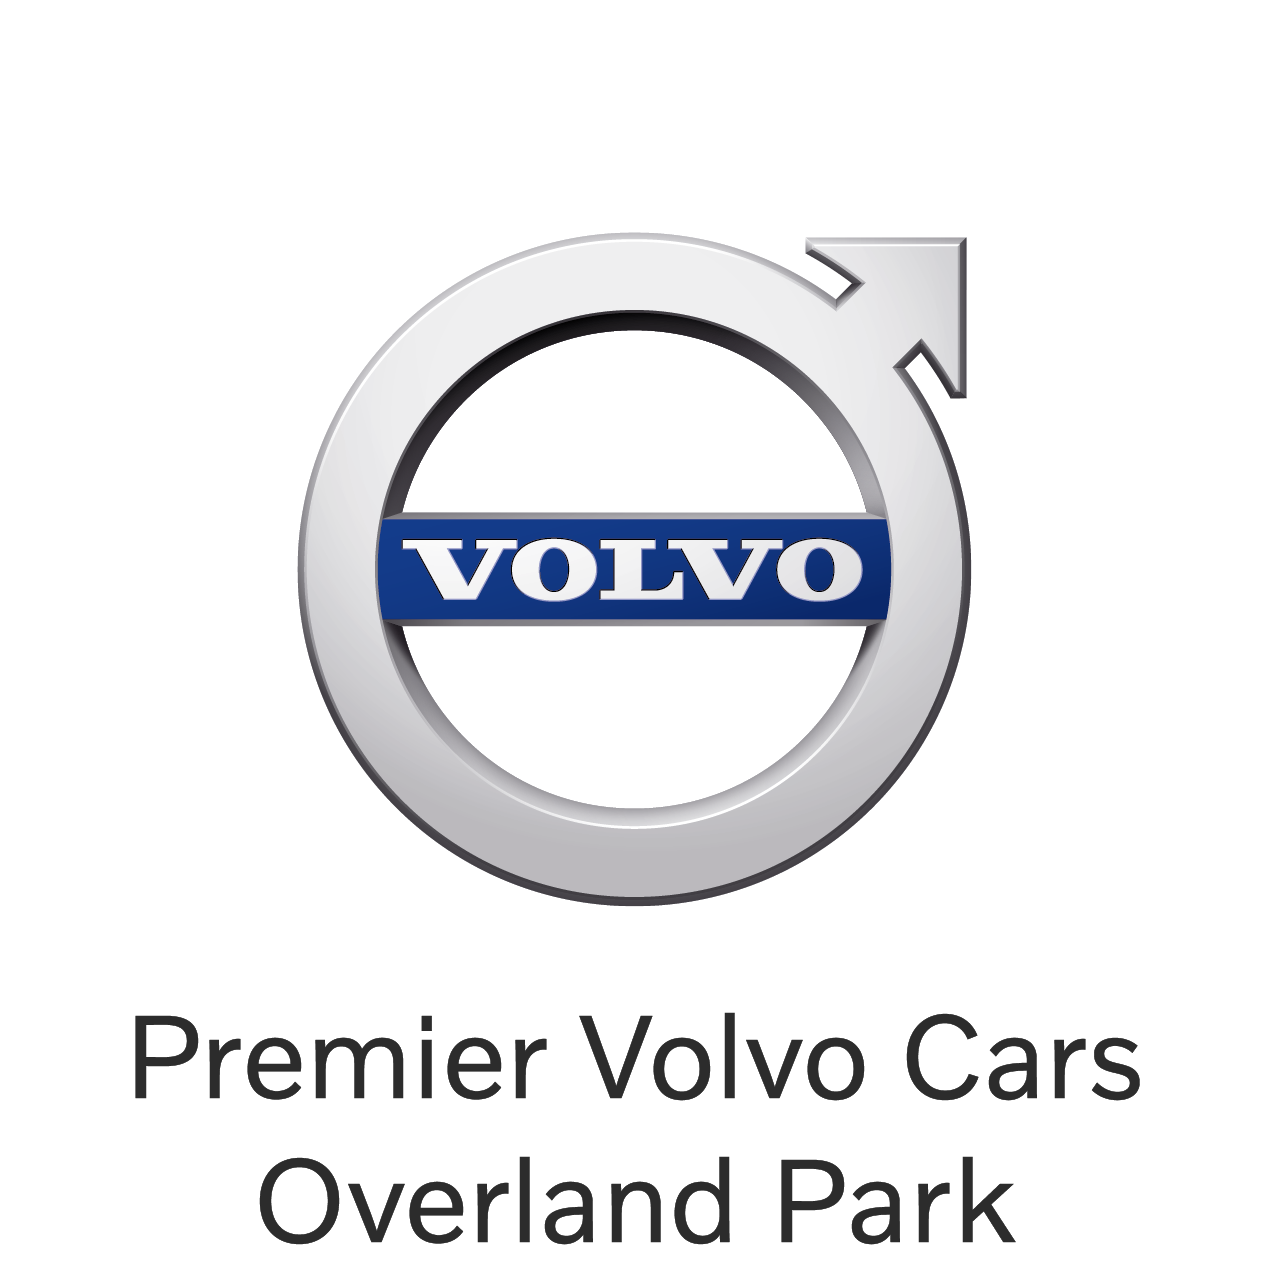 Premier Volvo Cars Overland Park - Overland Park, KS 66204 - (913)642-5050 | ShowMeLocal.com